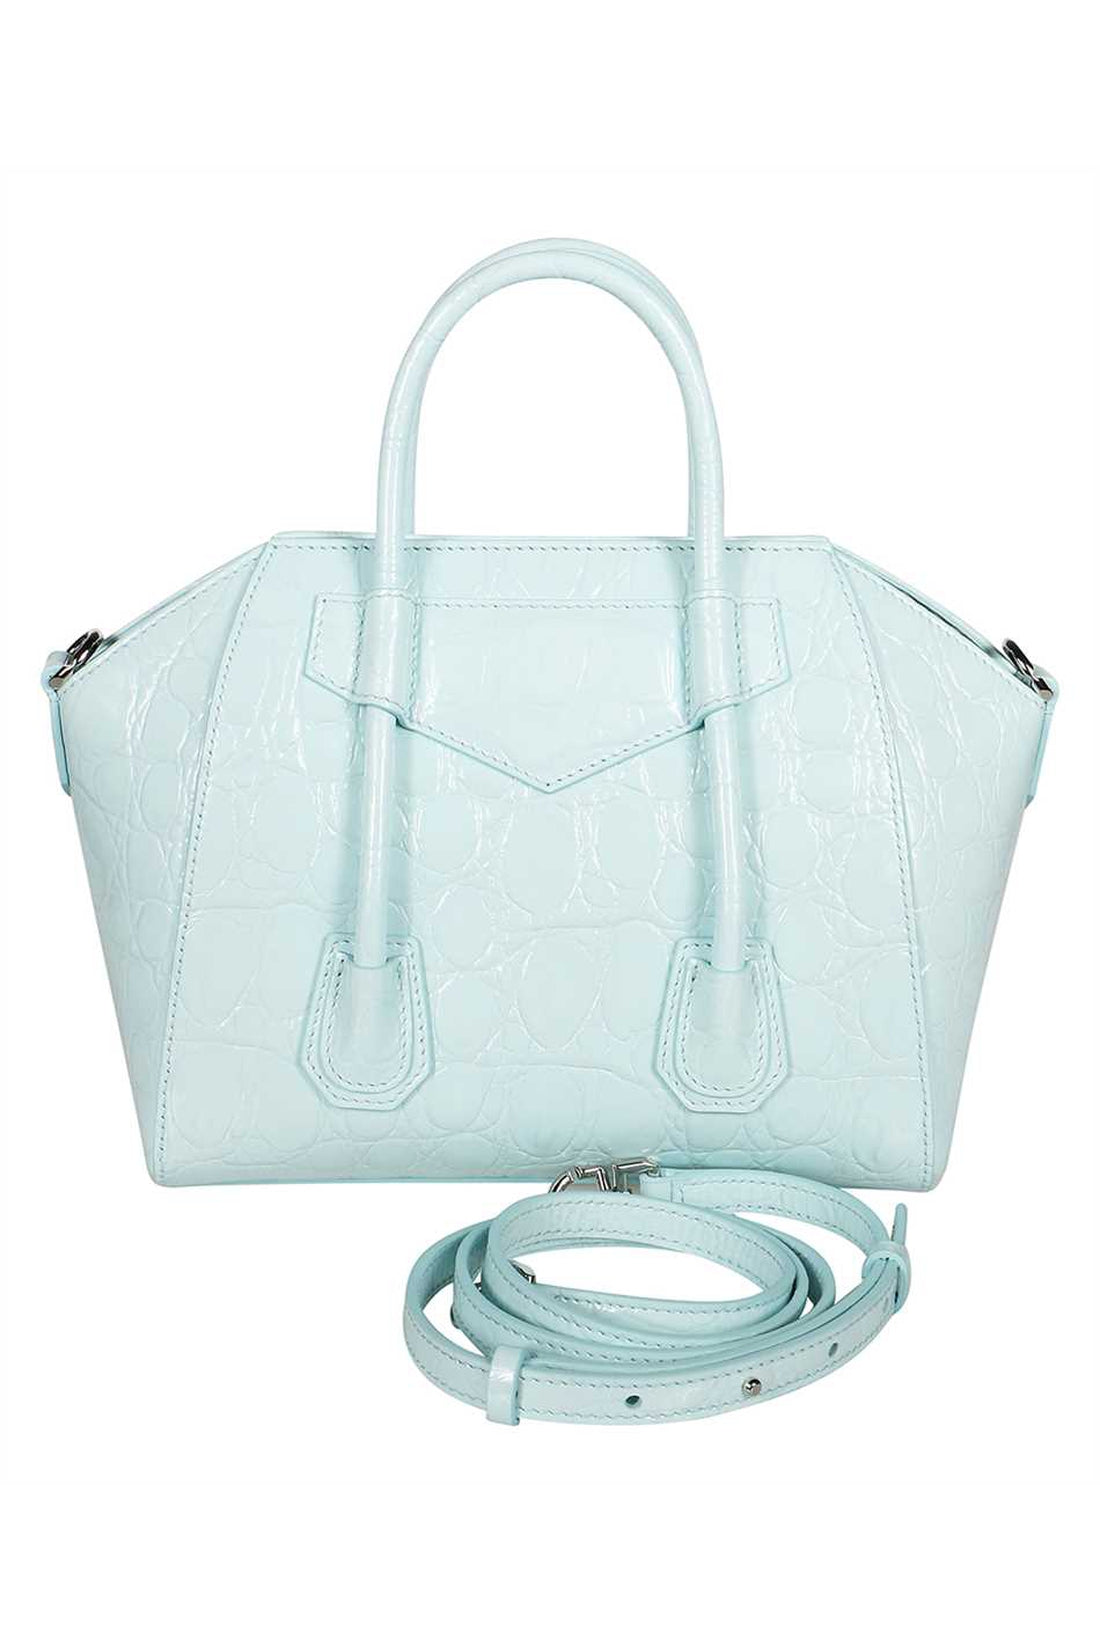 Givenchy-OUTLET-SALE-Mini Antigona Lock leather handbag-ARCHIVIST